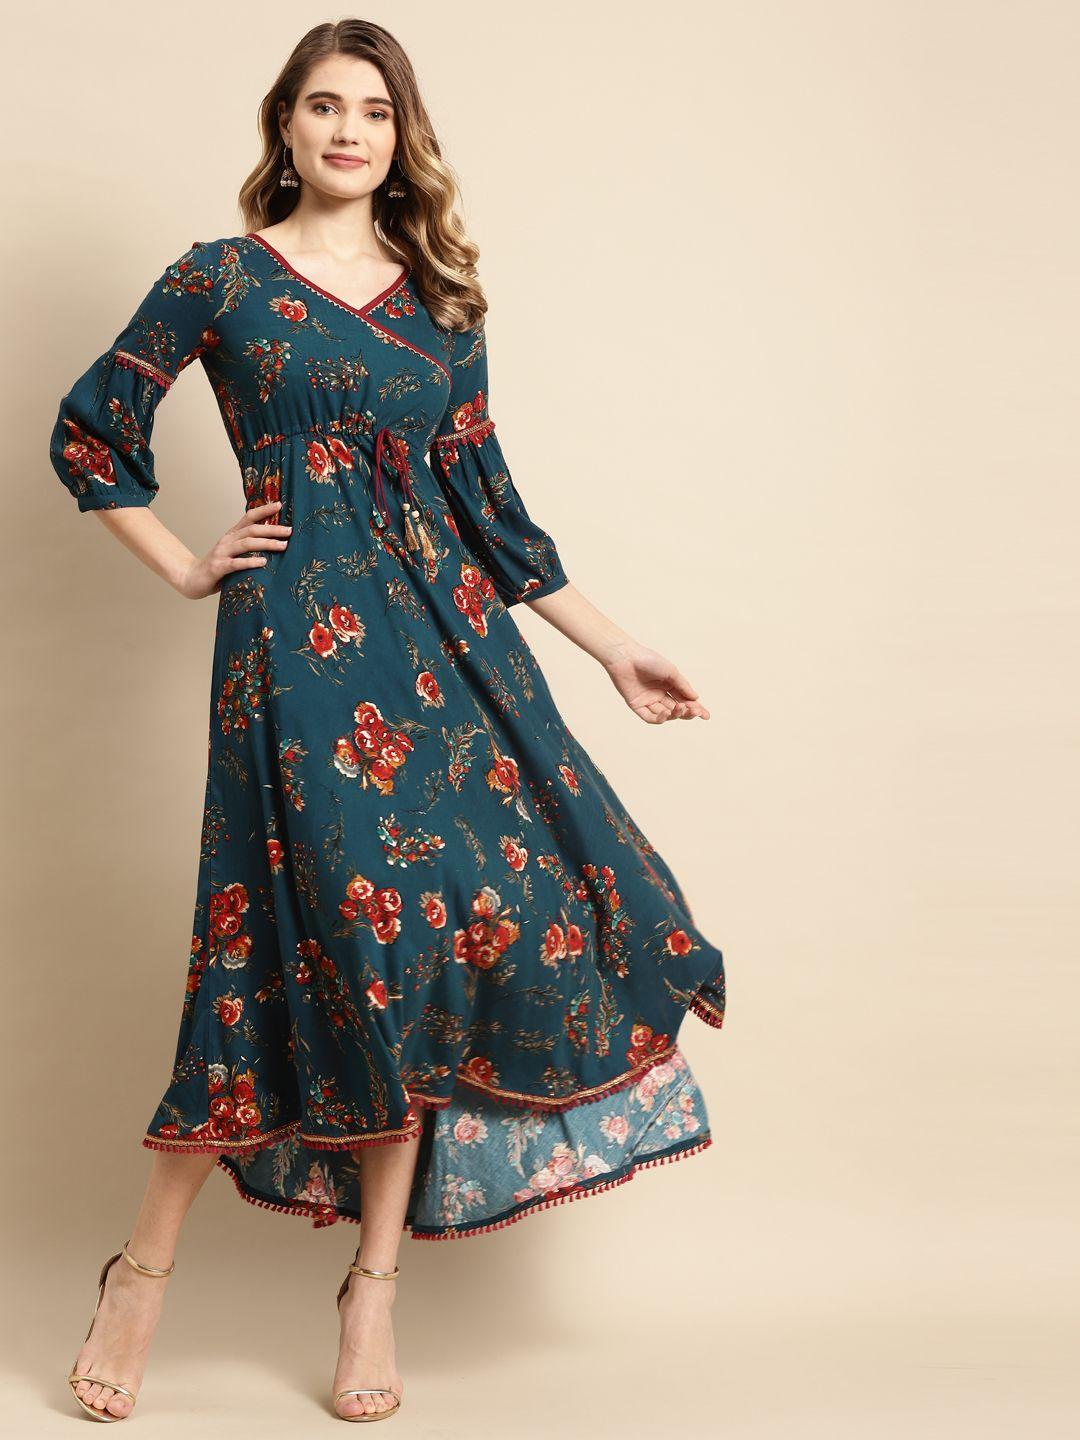 rangmayee teal & maroon floral printed ethnic a-line midi dress